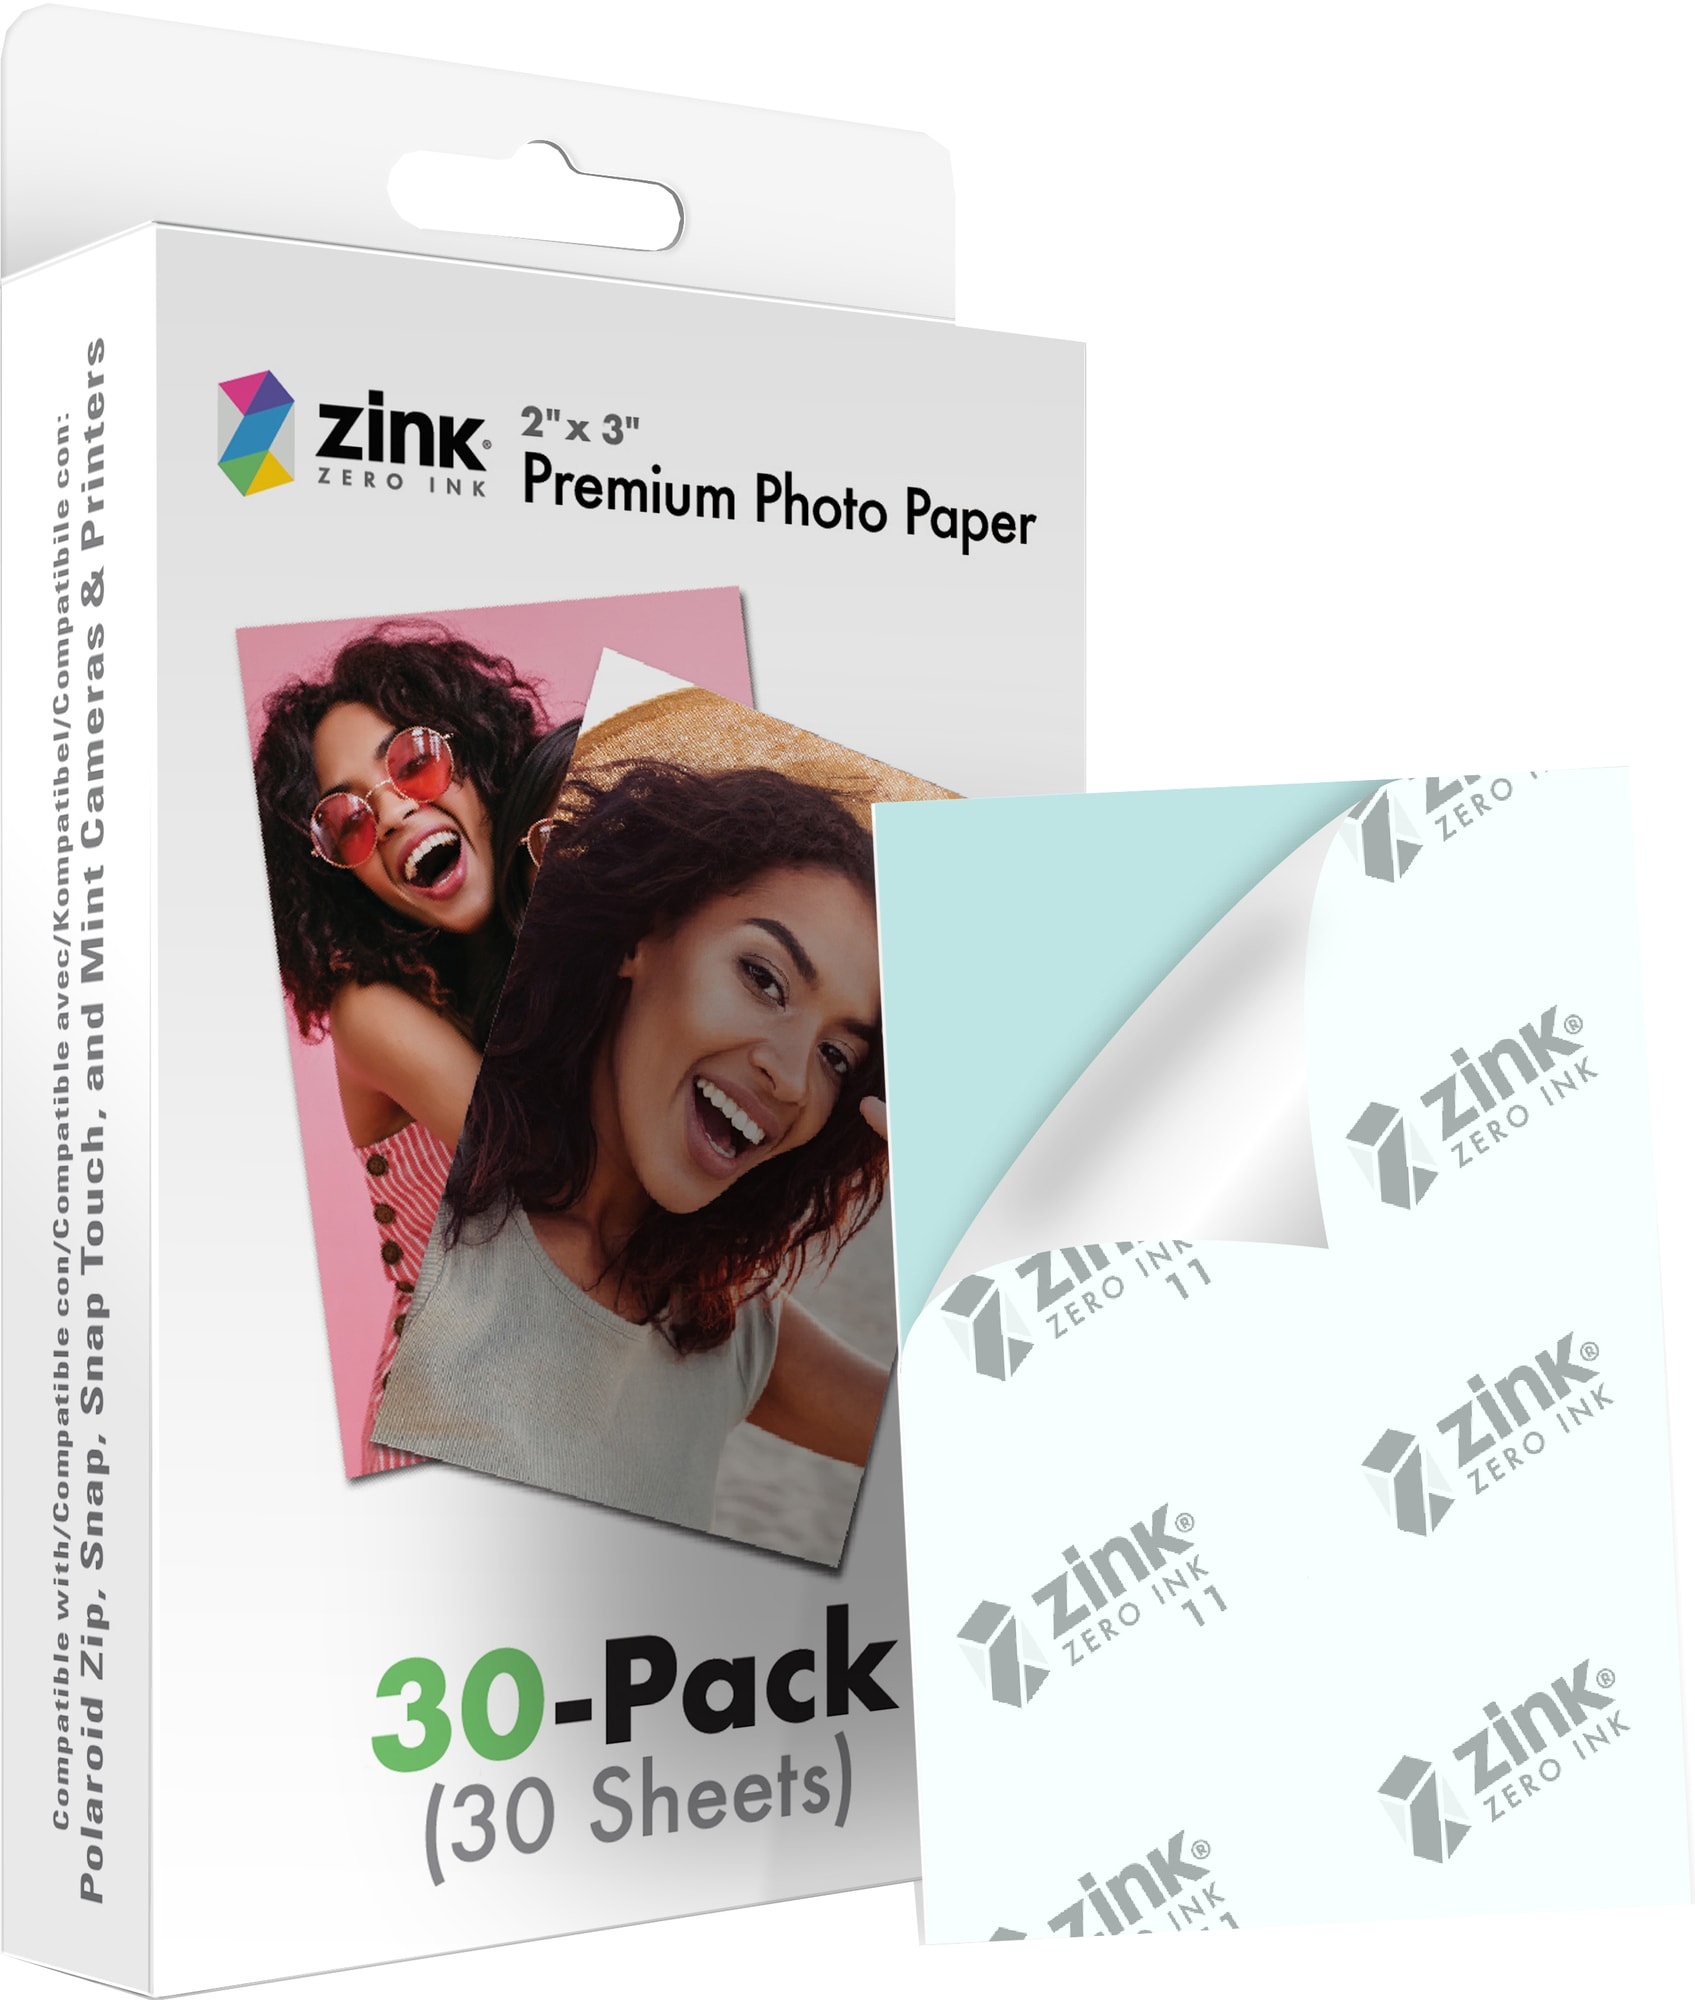 Polaroid ZINK Zero-Ink fotopapir 2" x 3" (30 stk.) | Elgiganten